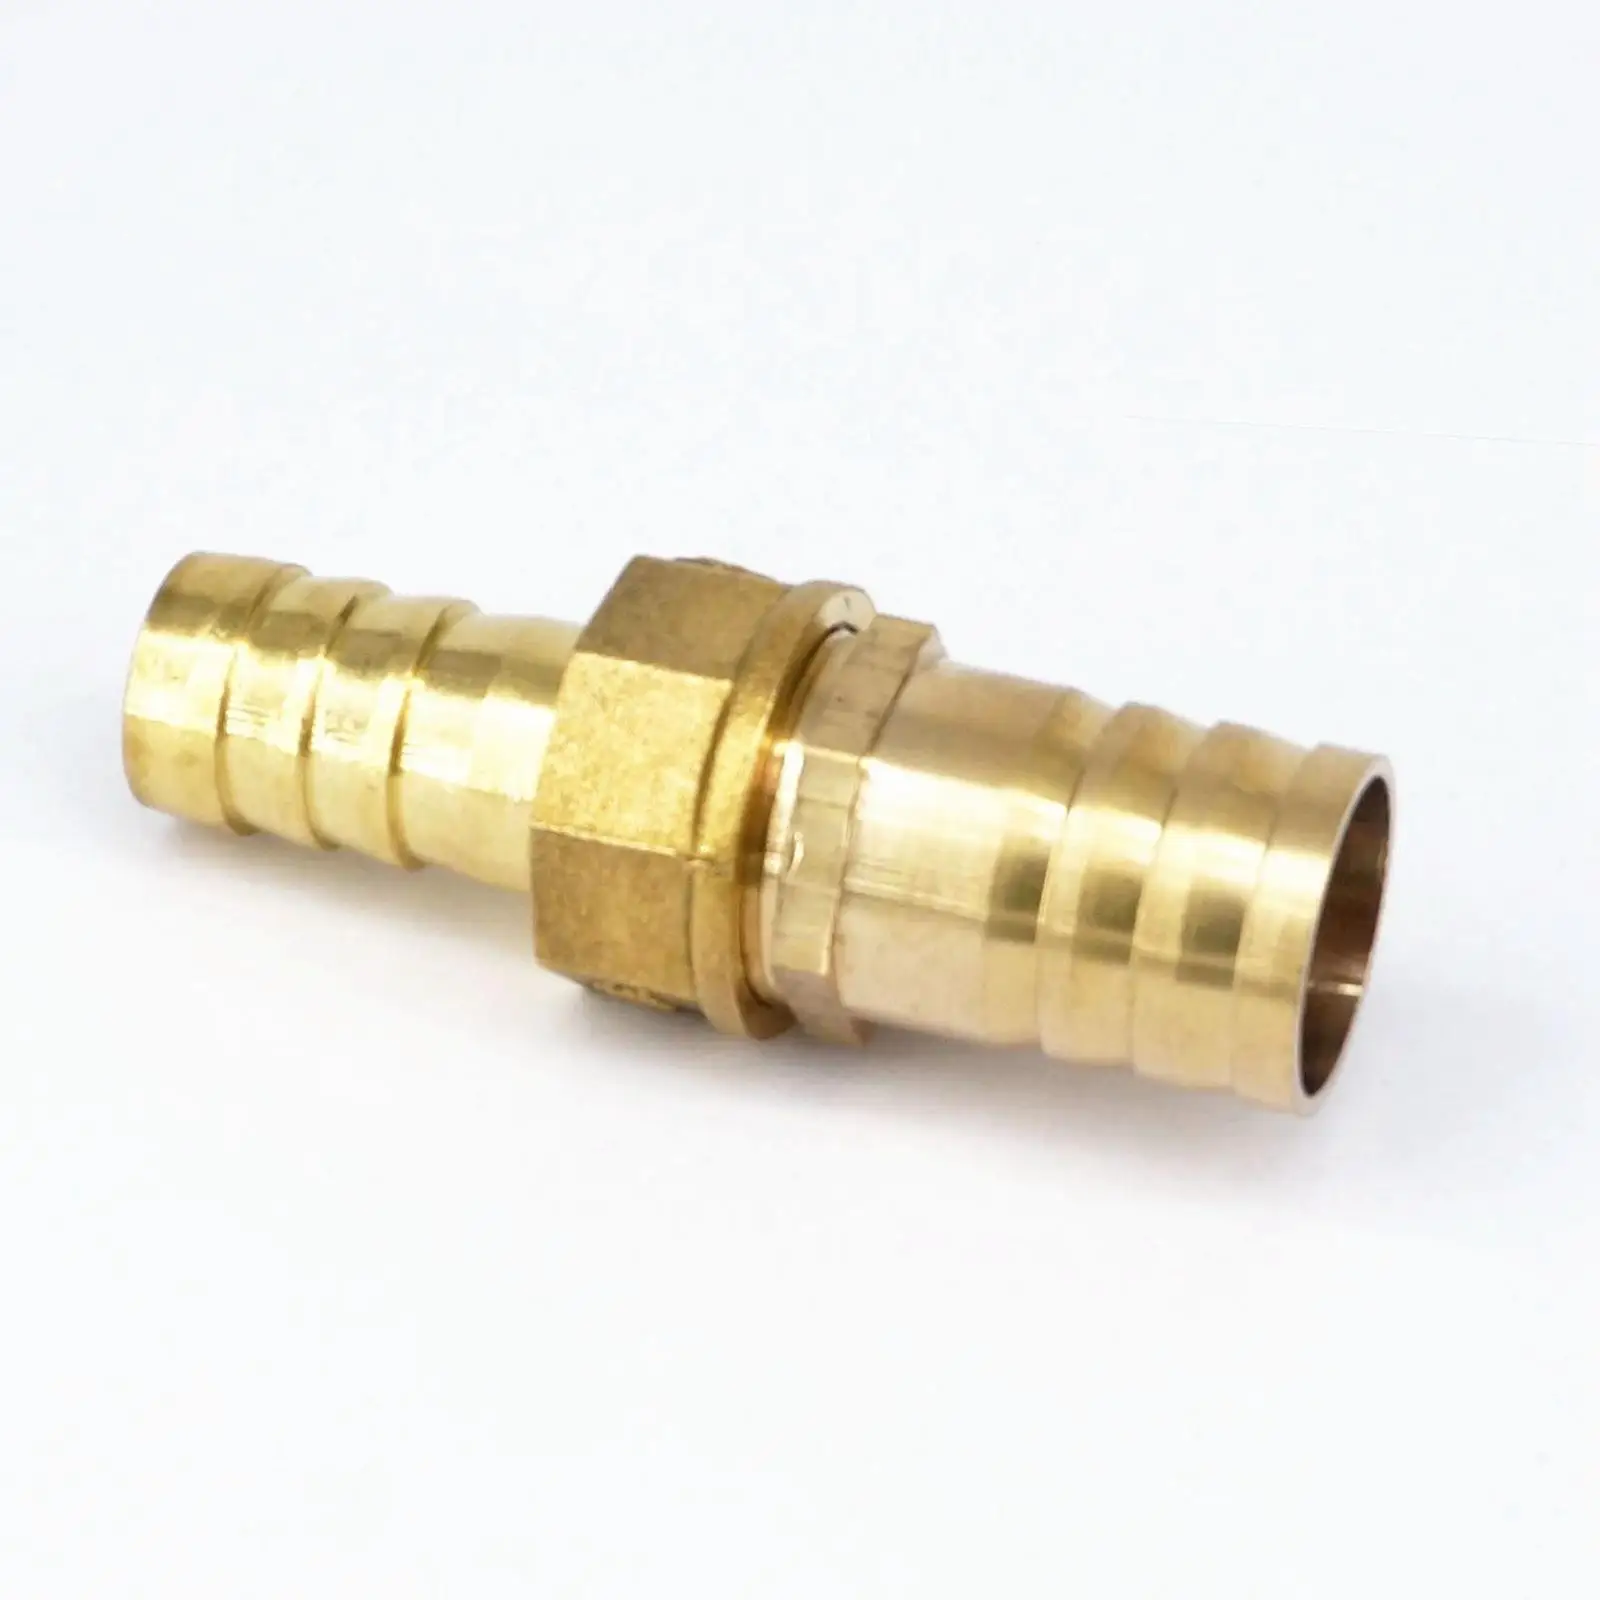 Hose Barb I/D 19mm x Hose Barb I/D 25mm Brass coupler Splicer Connector fitting for Fuel Gas Water